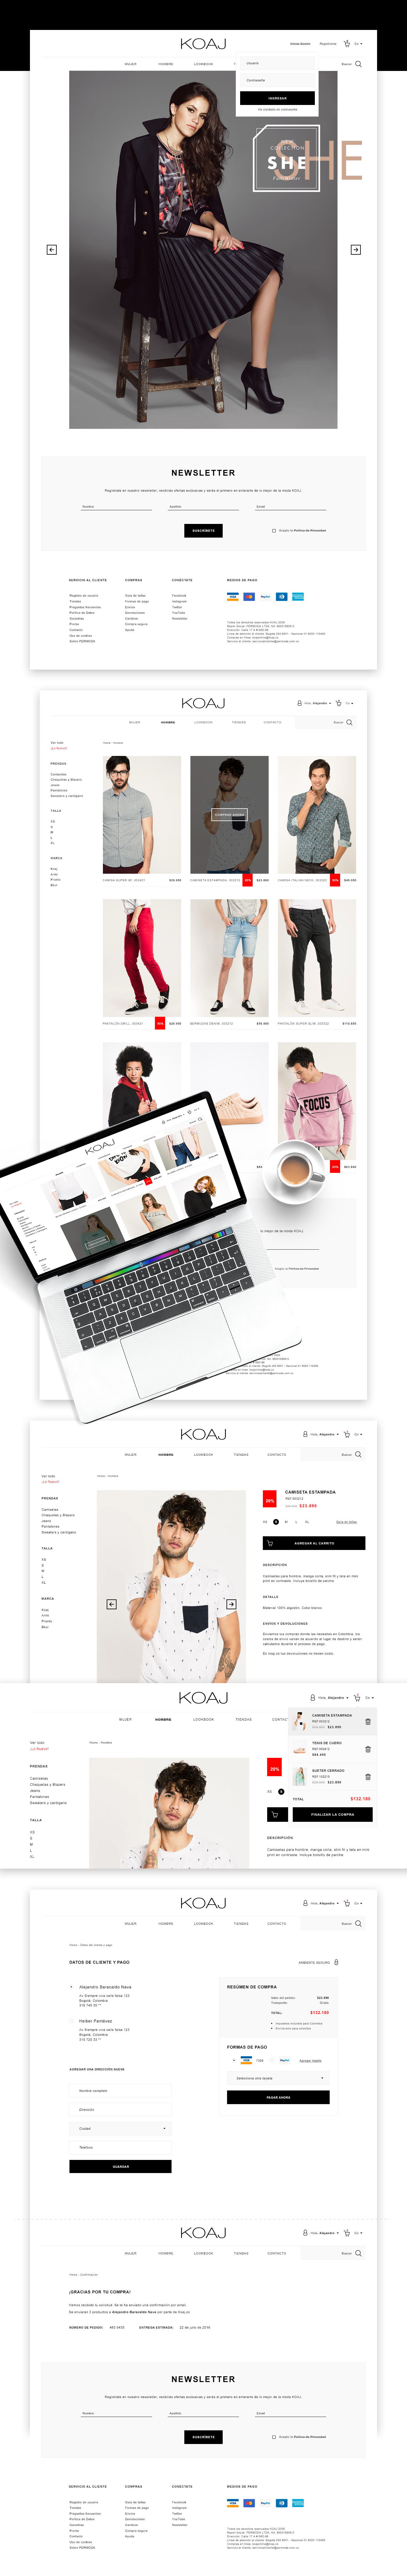 Website ux UI Ropa moda